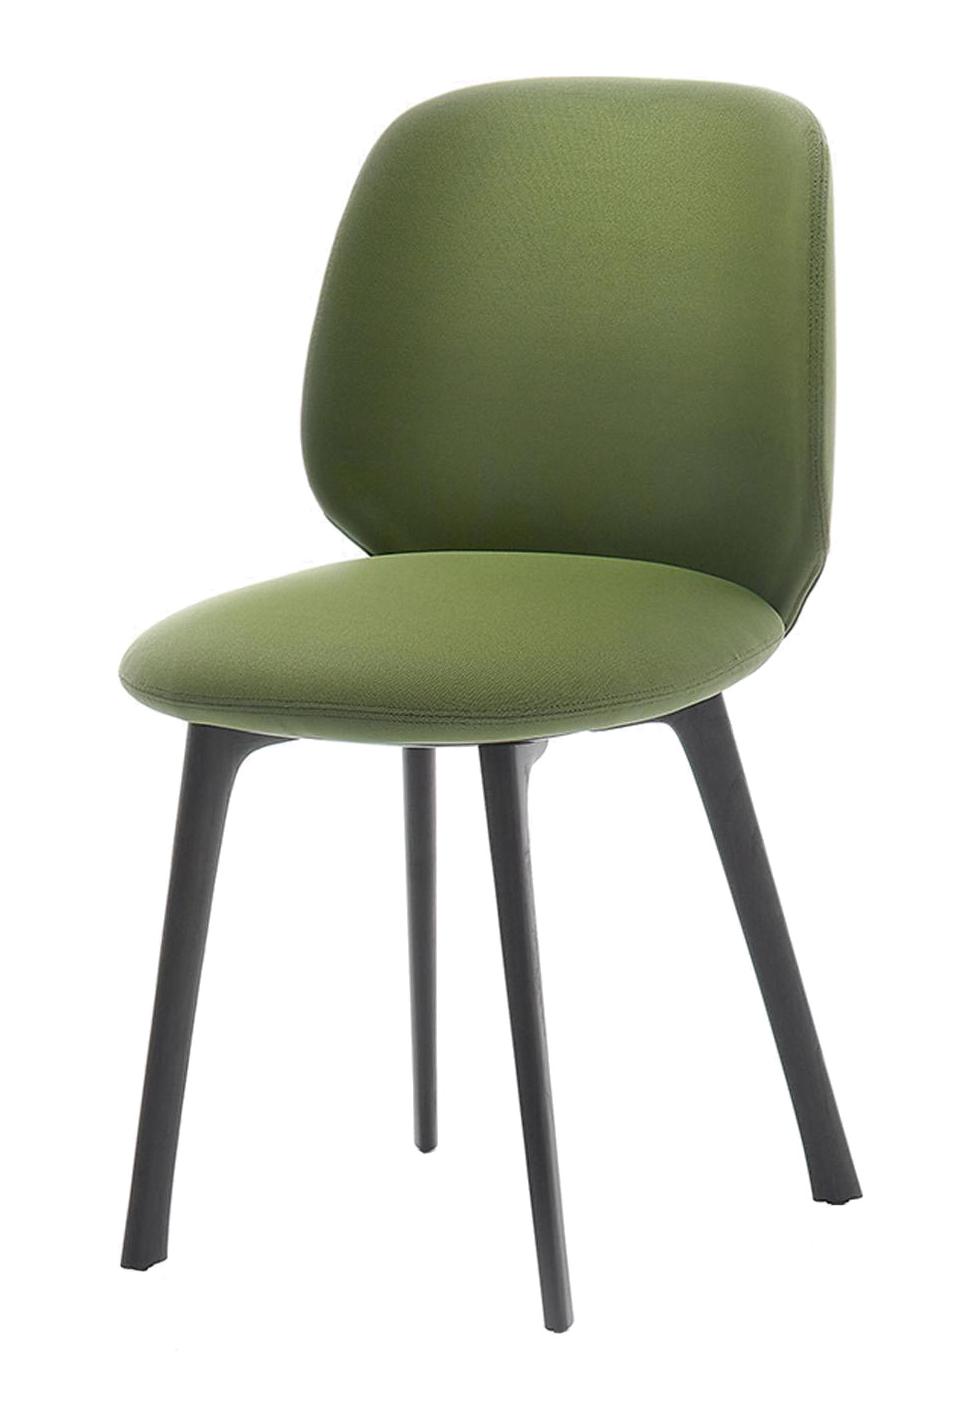 Universal Italian Chair